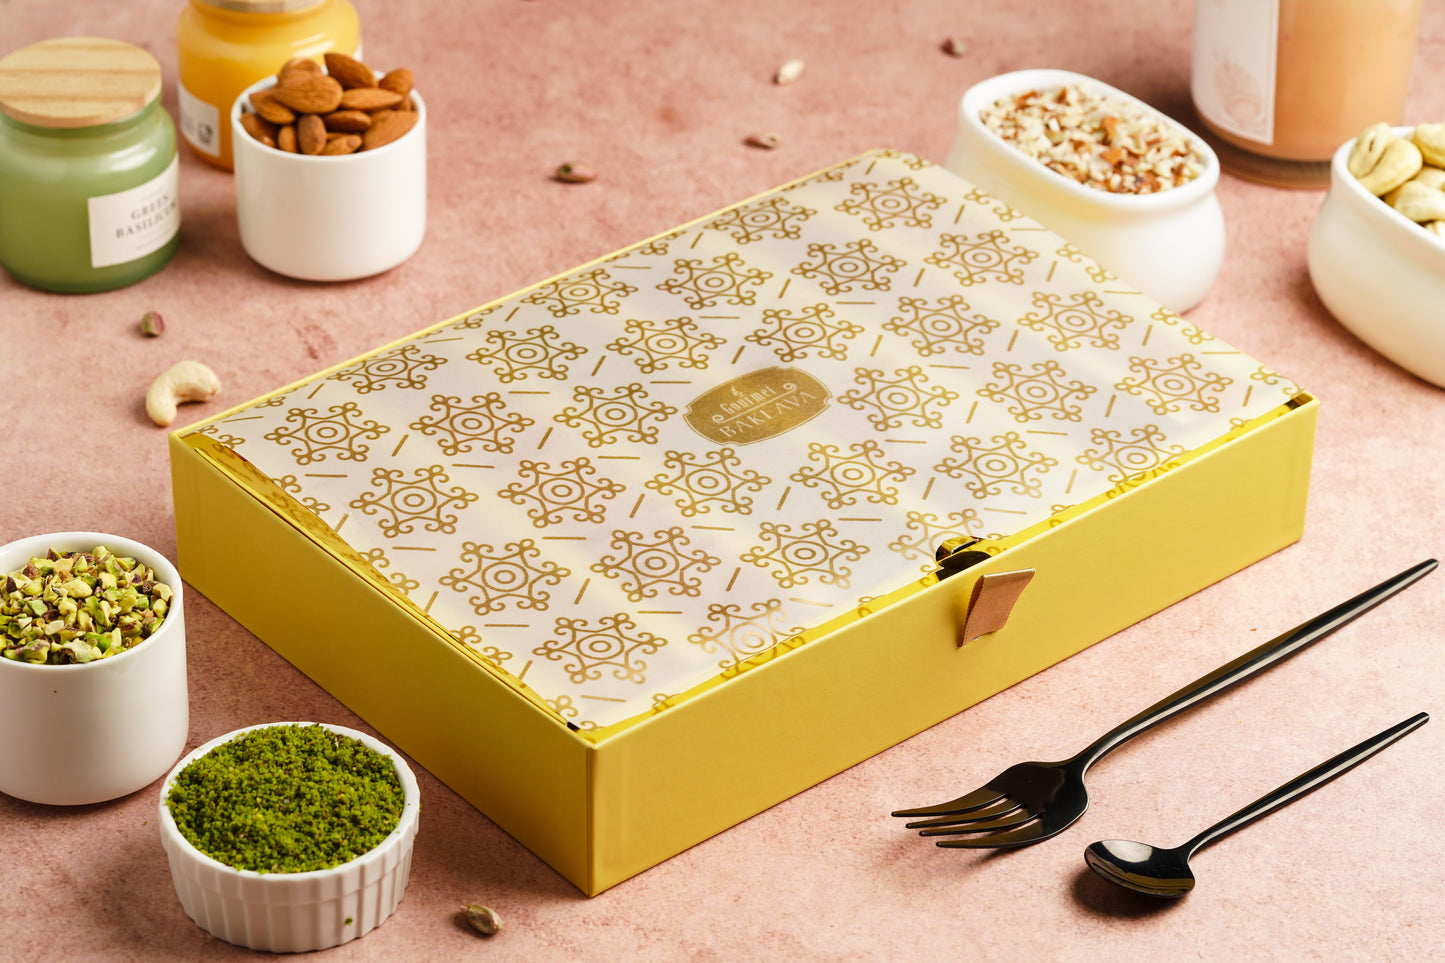 Gourmet Luxury Gift Box of Pistachio Burma Baklava